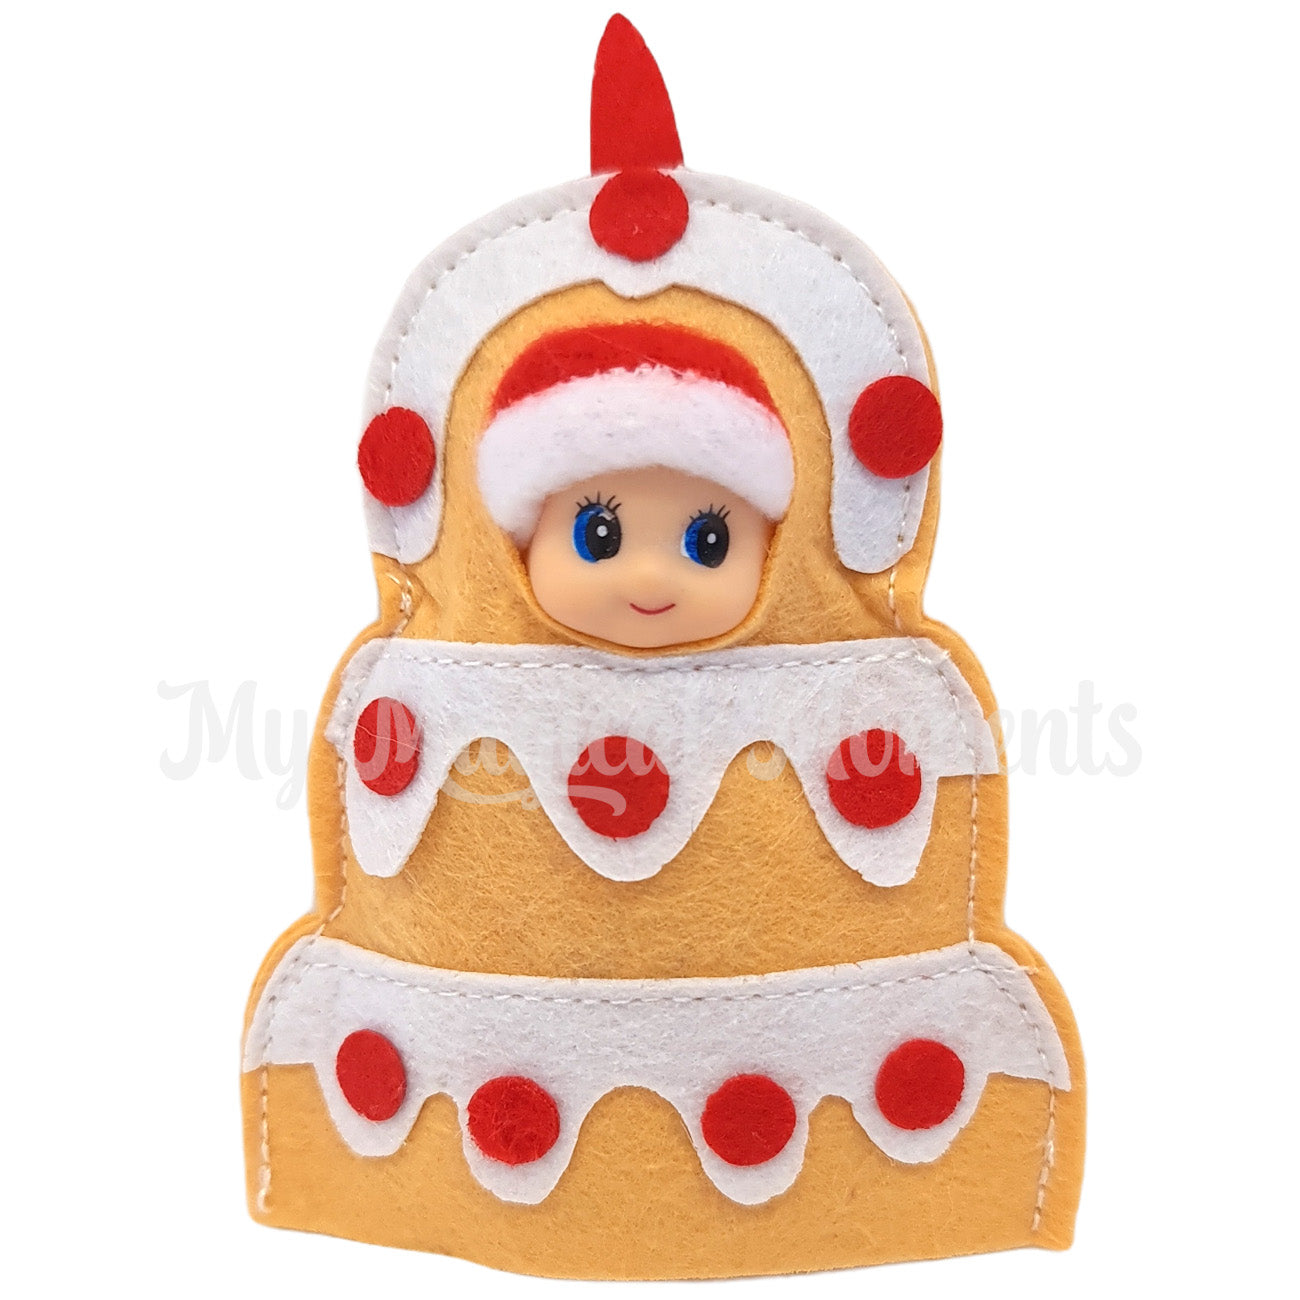 baby elf wearing a cake dress up